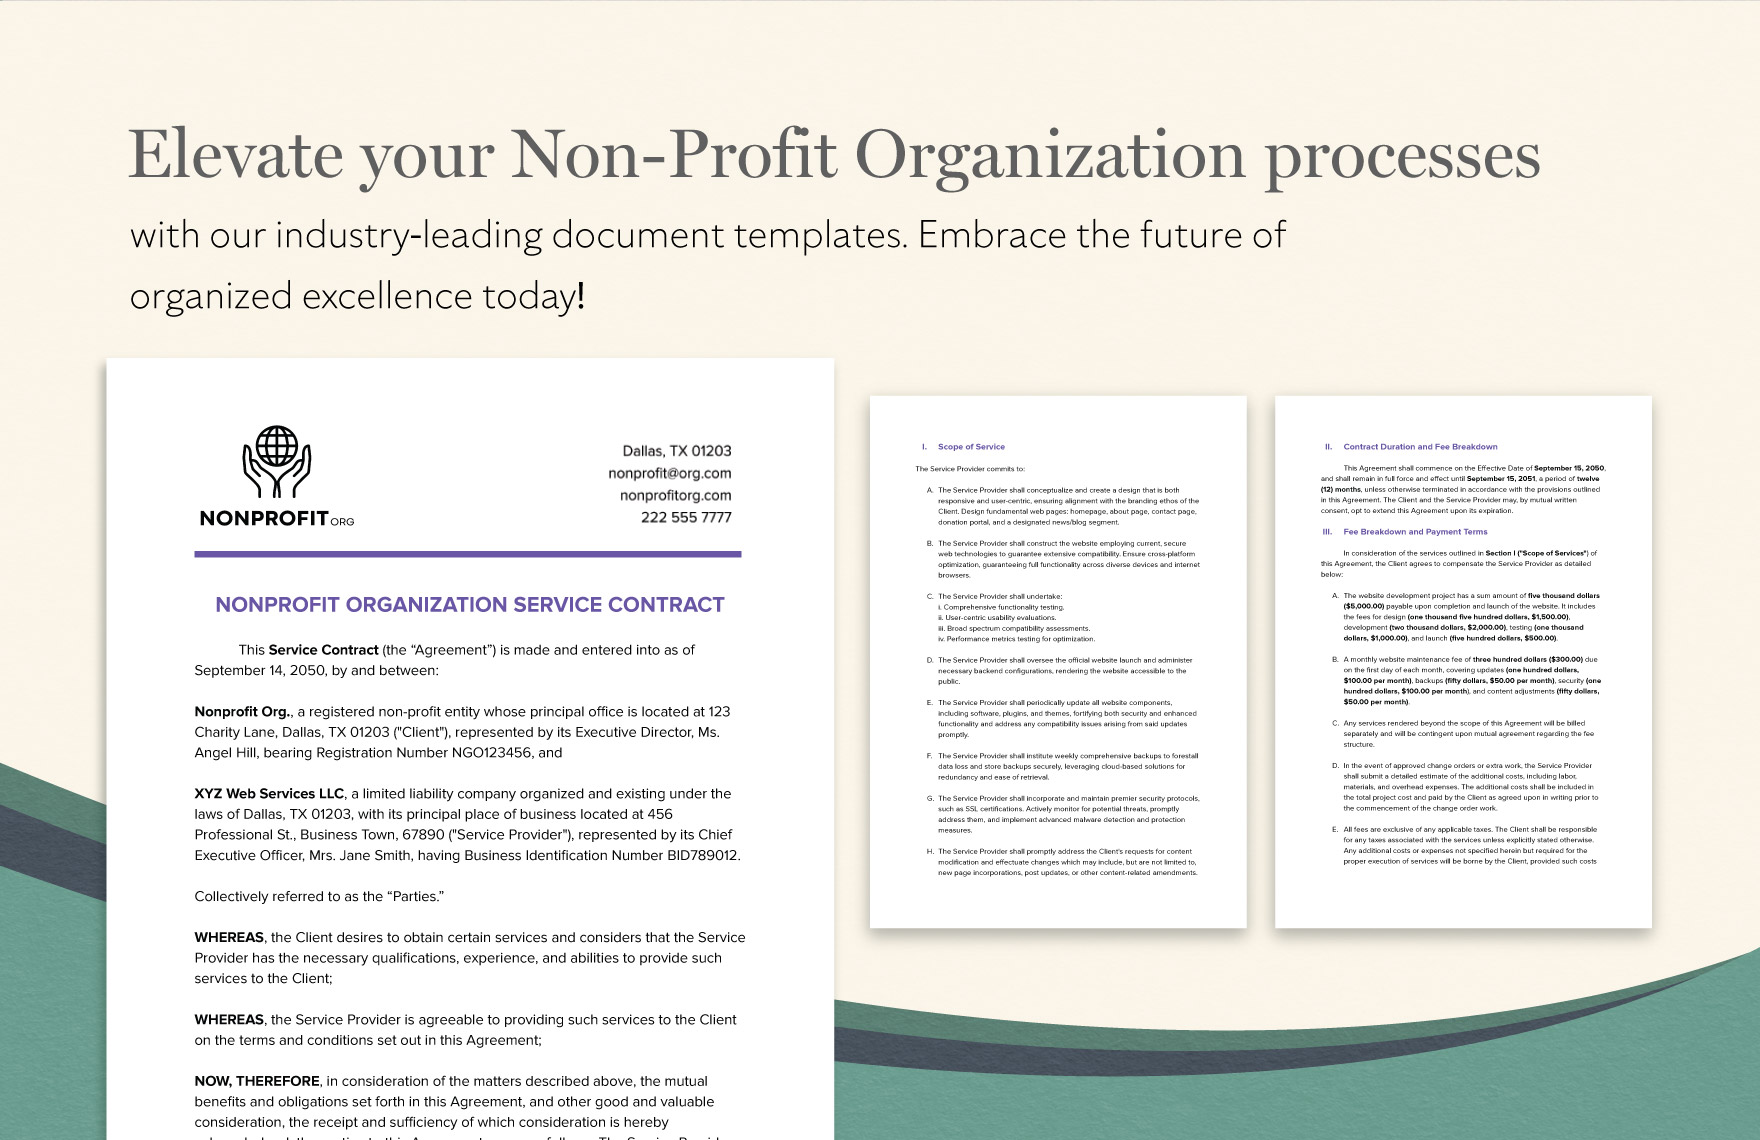 Nonprofit Organization Service Contract Template